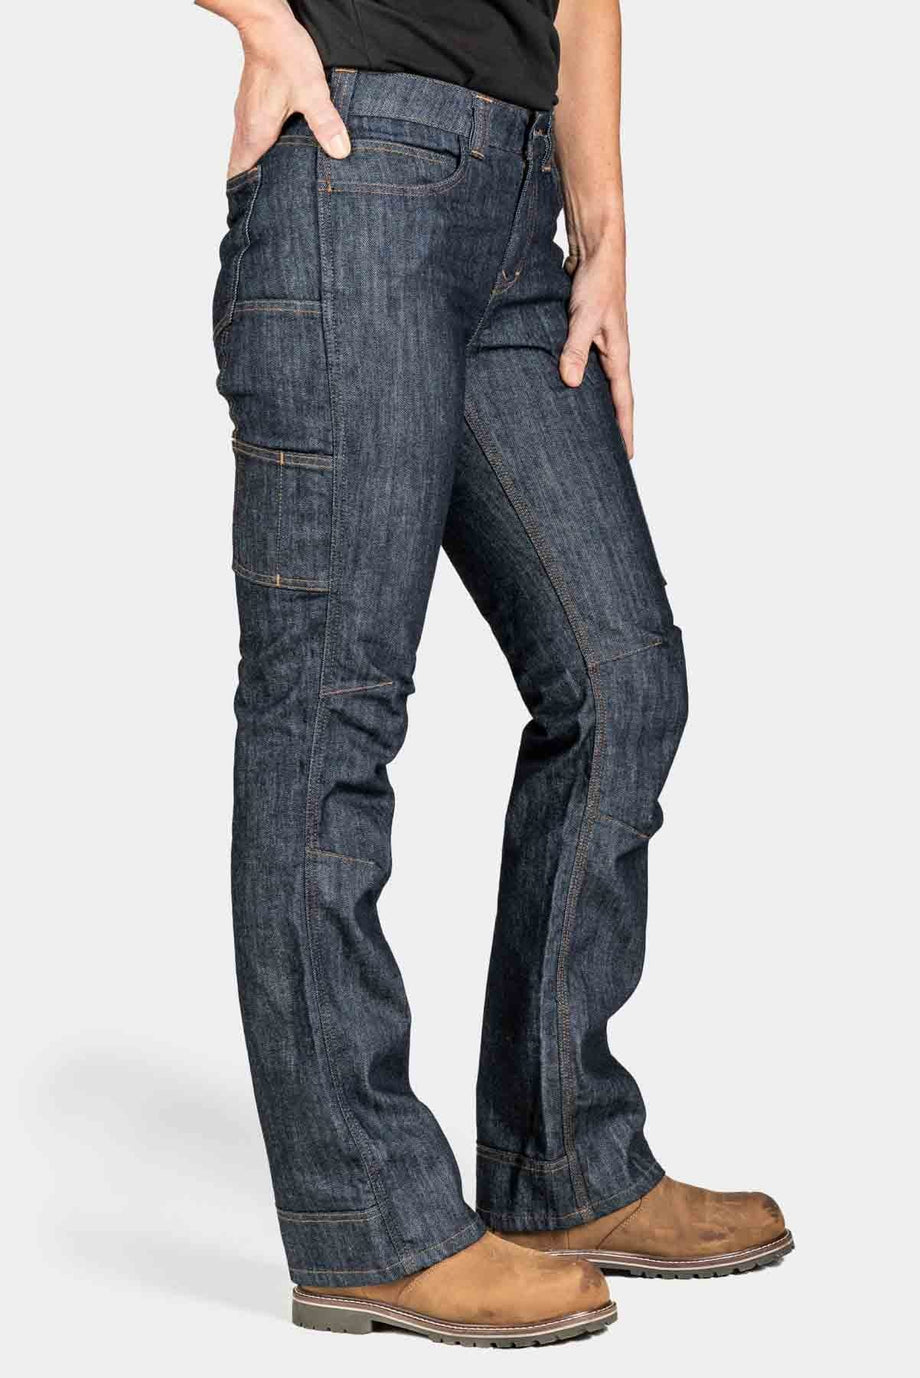 Carhartt Mens Blue Denim Slim-Fit Full-Length 5-Pocket Bootcut Jeans W 28”  L 32”